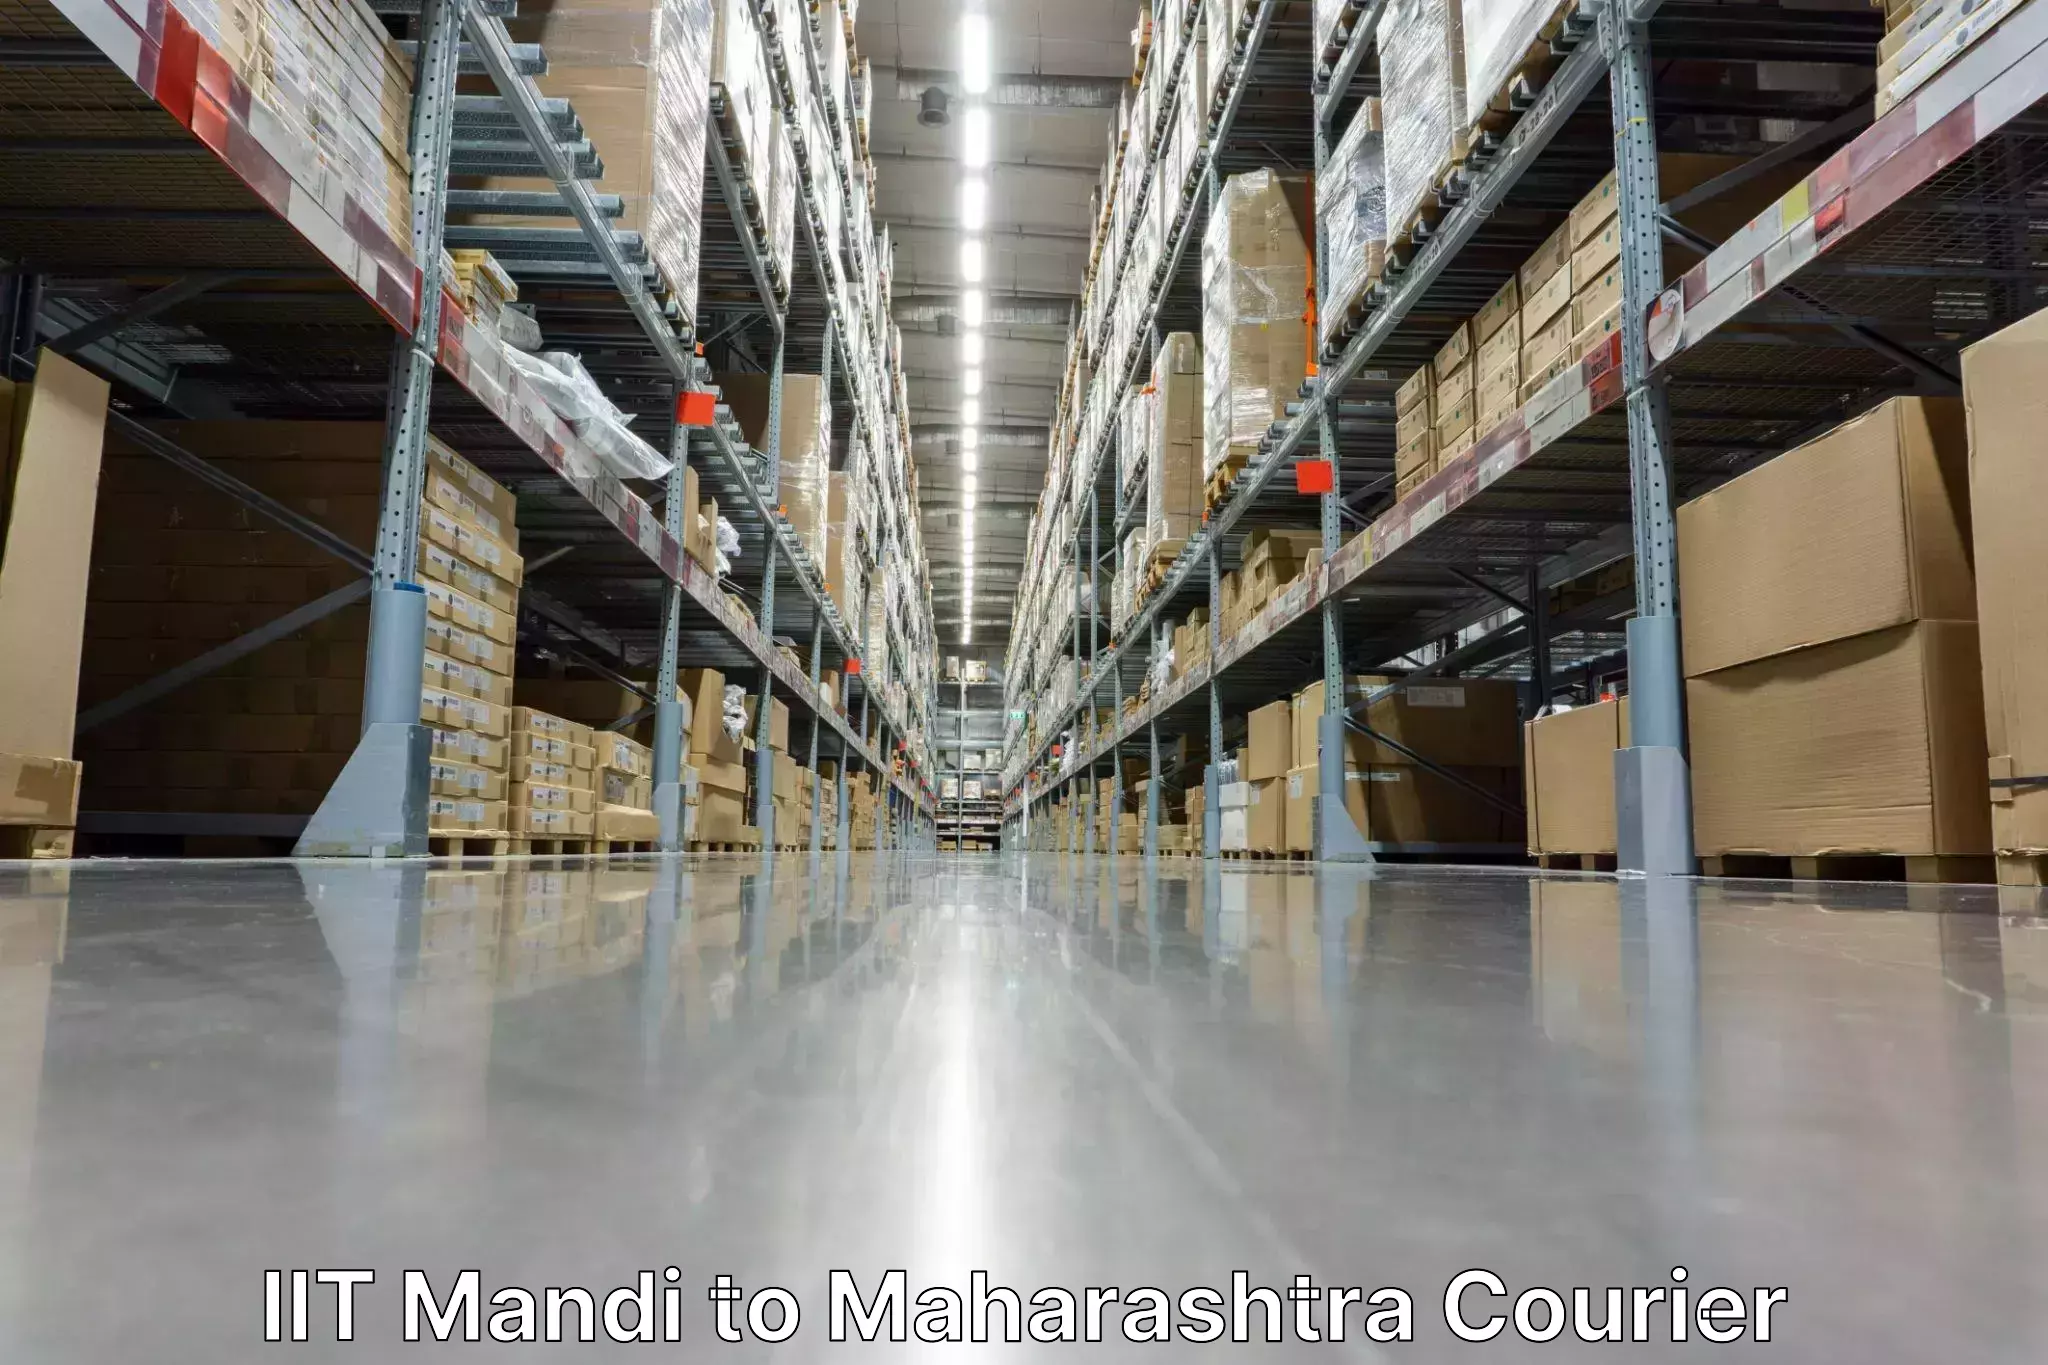 Custom courier packaging IIT Mandi to Maharashtra